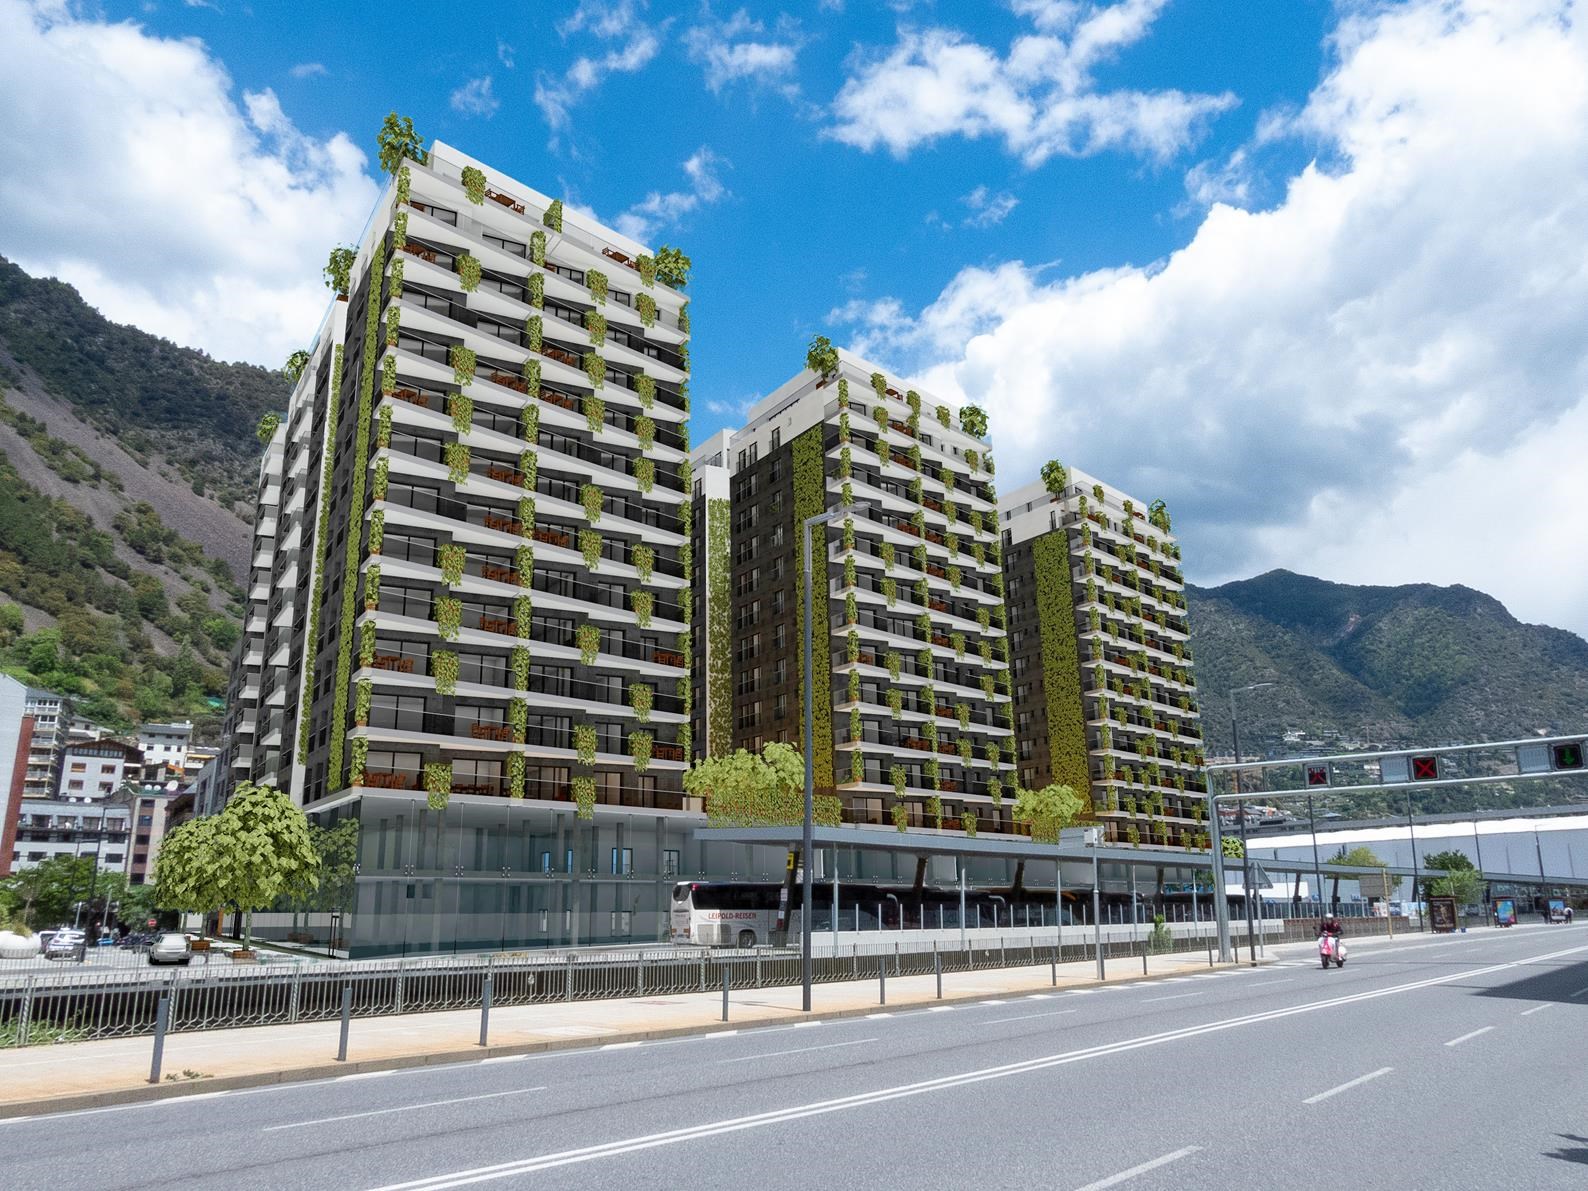 Despatx en venda a Andorra la Vella, 115 metres